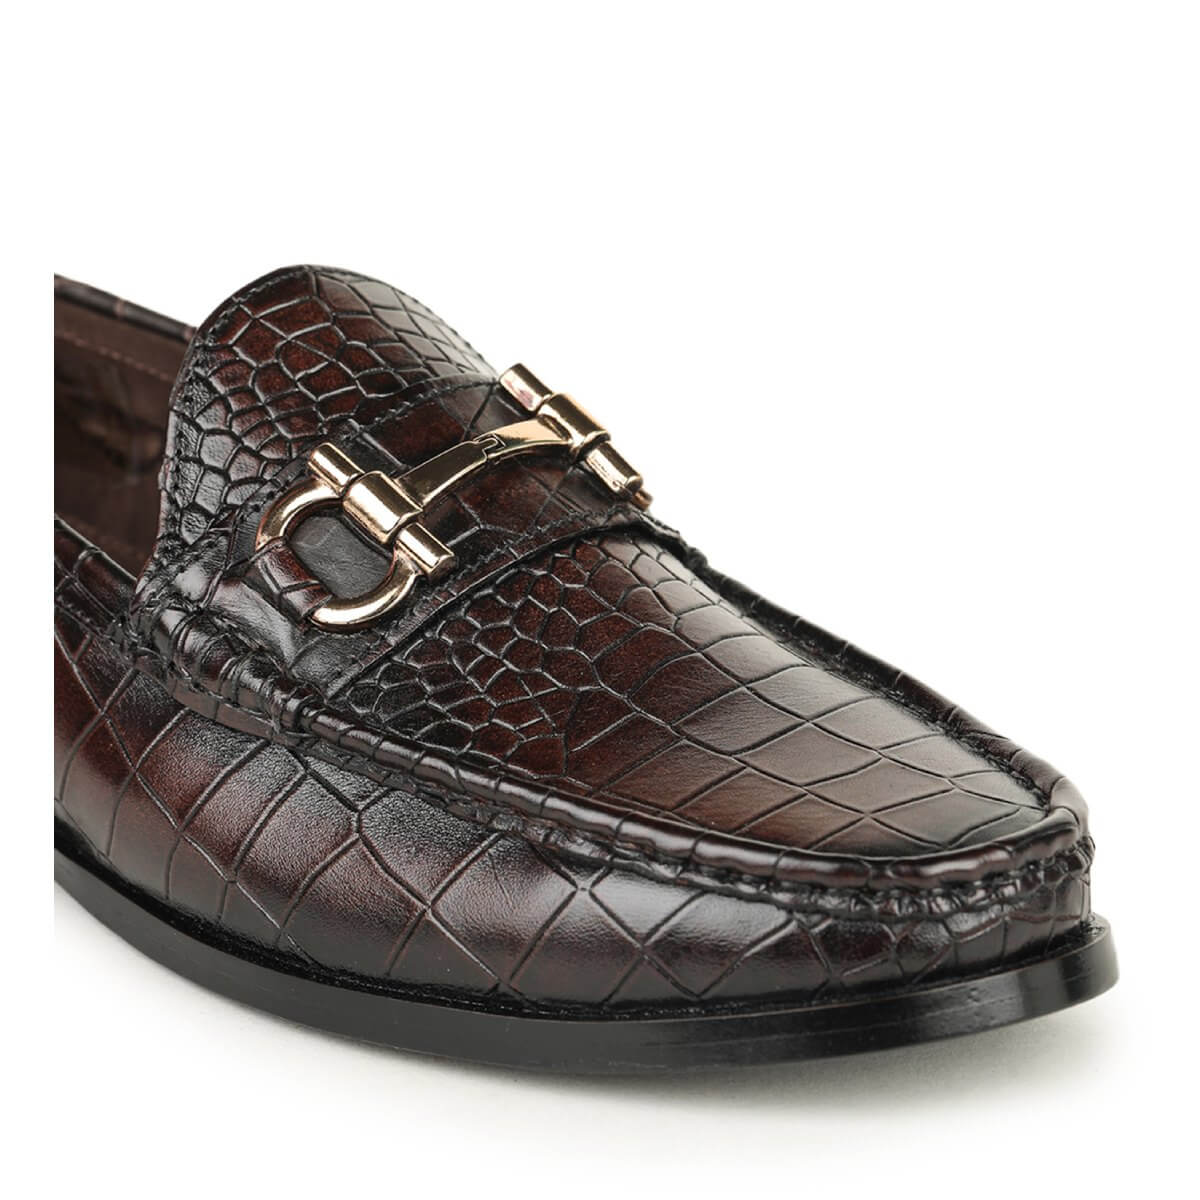 crocs loafer shoes brown_4